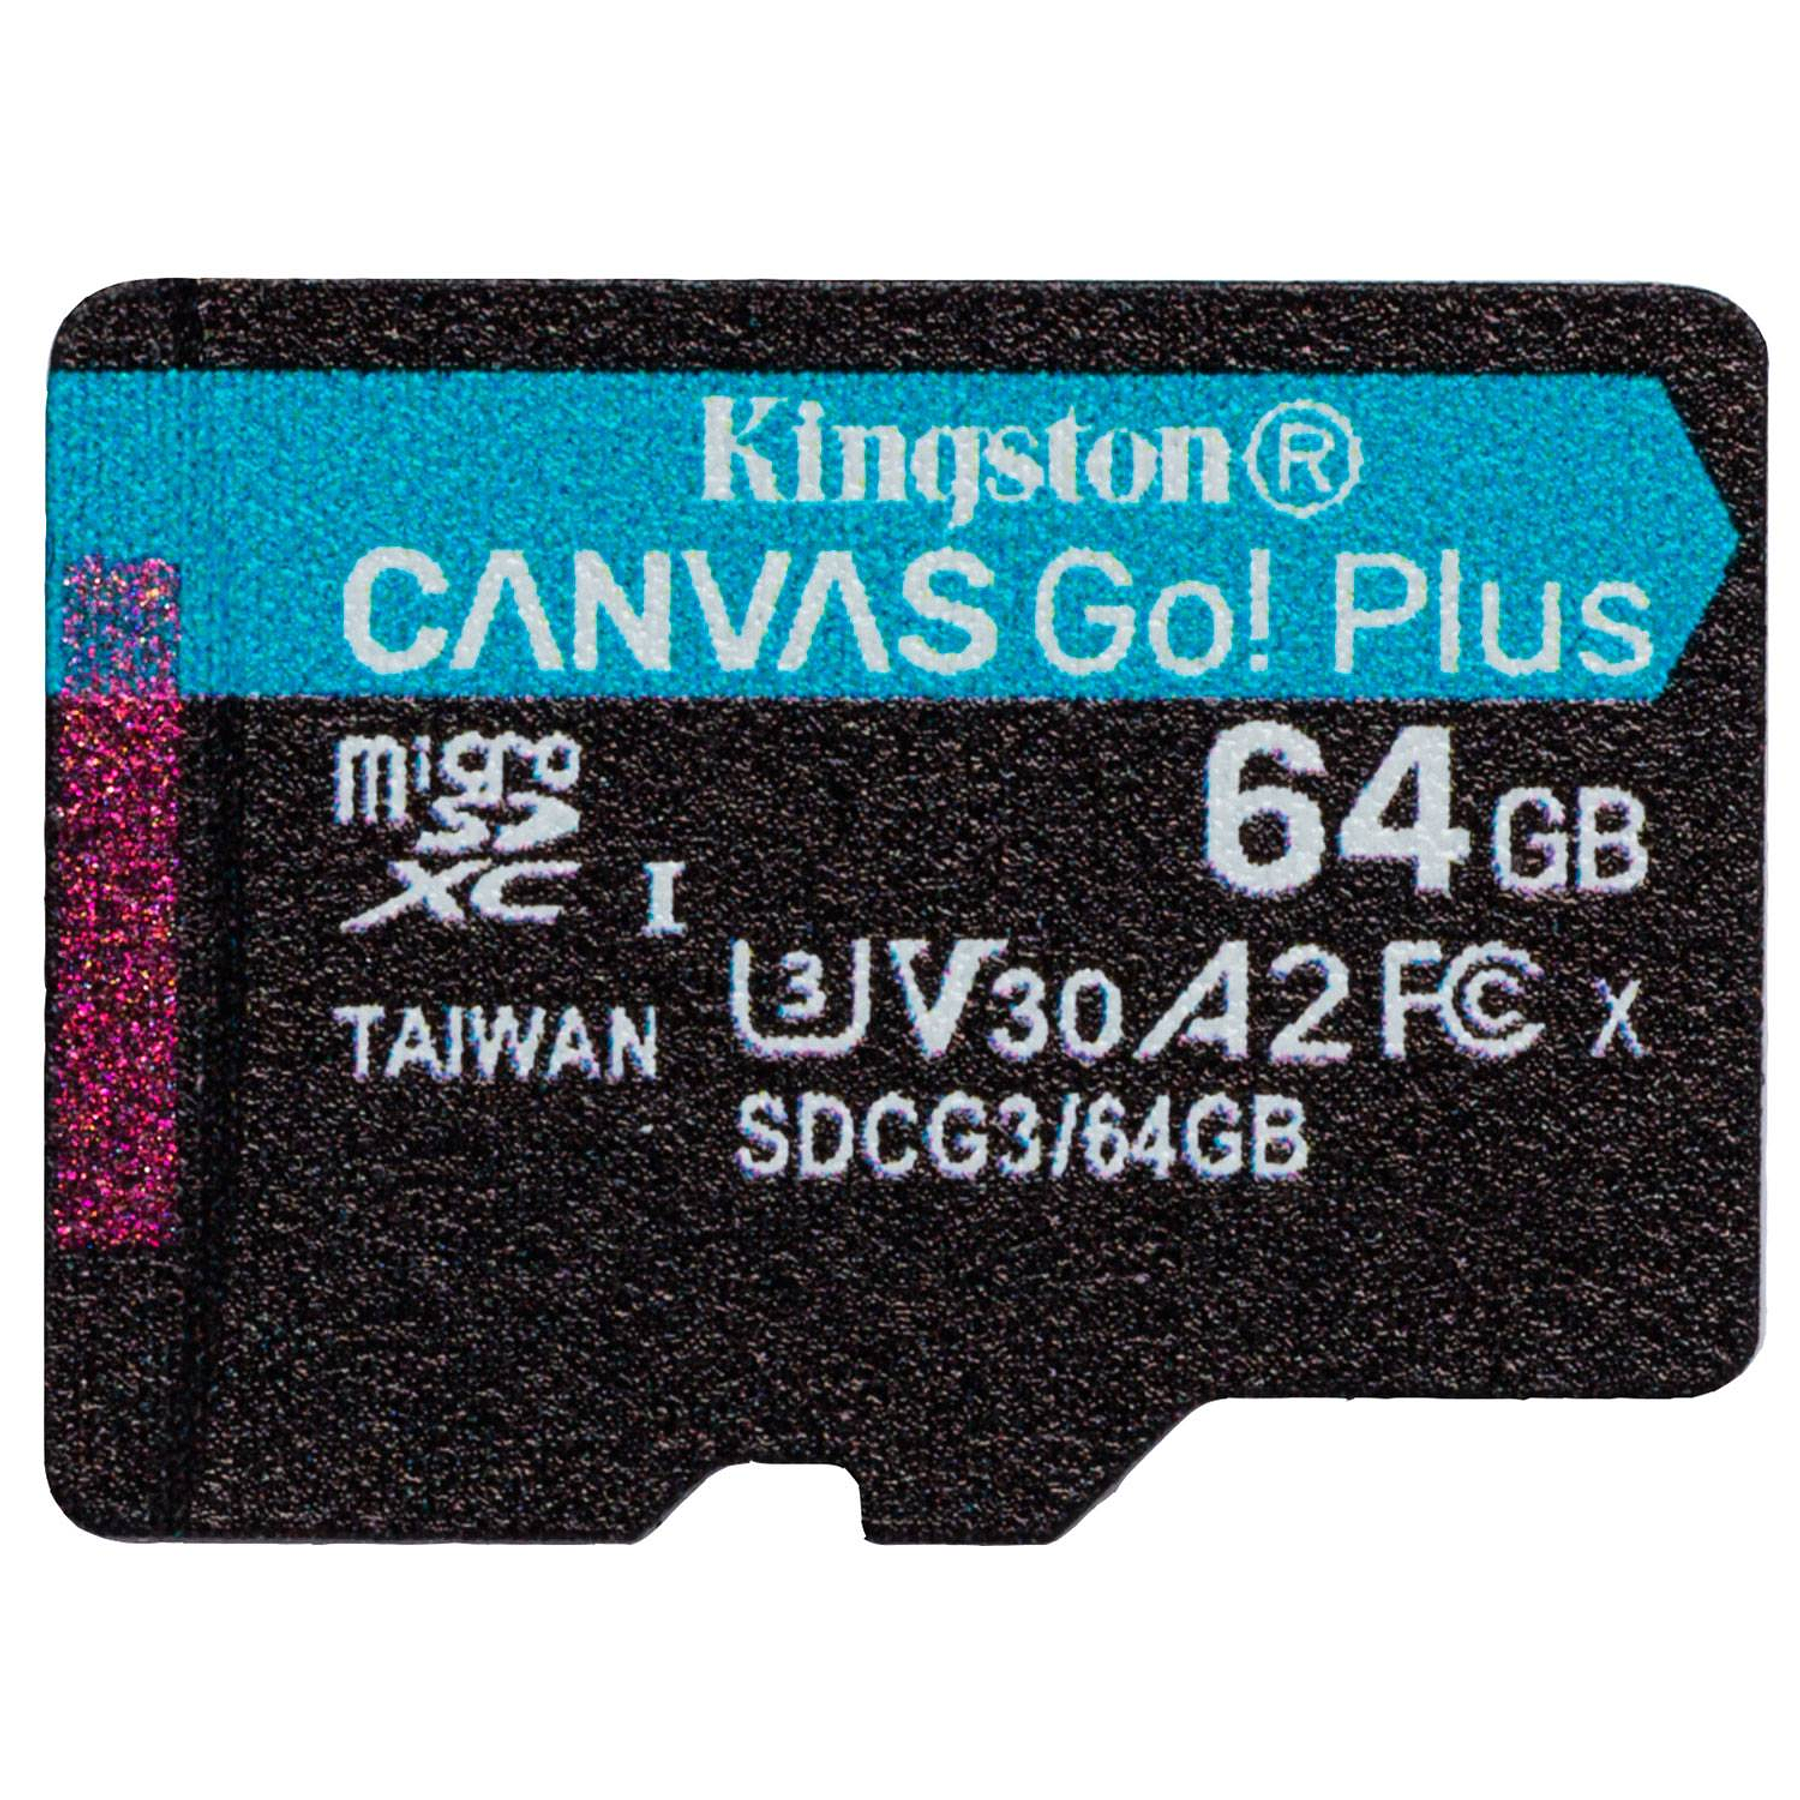 Kingston Canvas Go! Plus Tarjeta de Memoria Flash 64 GB A2